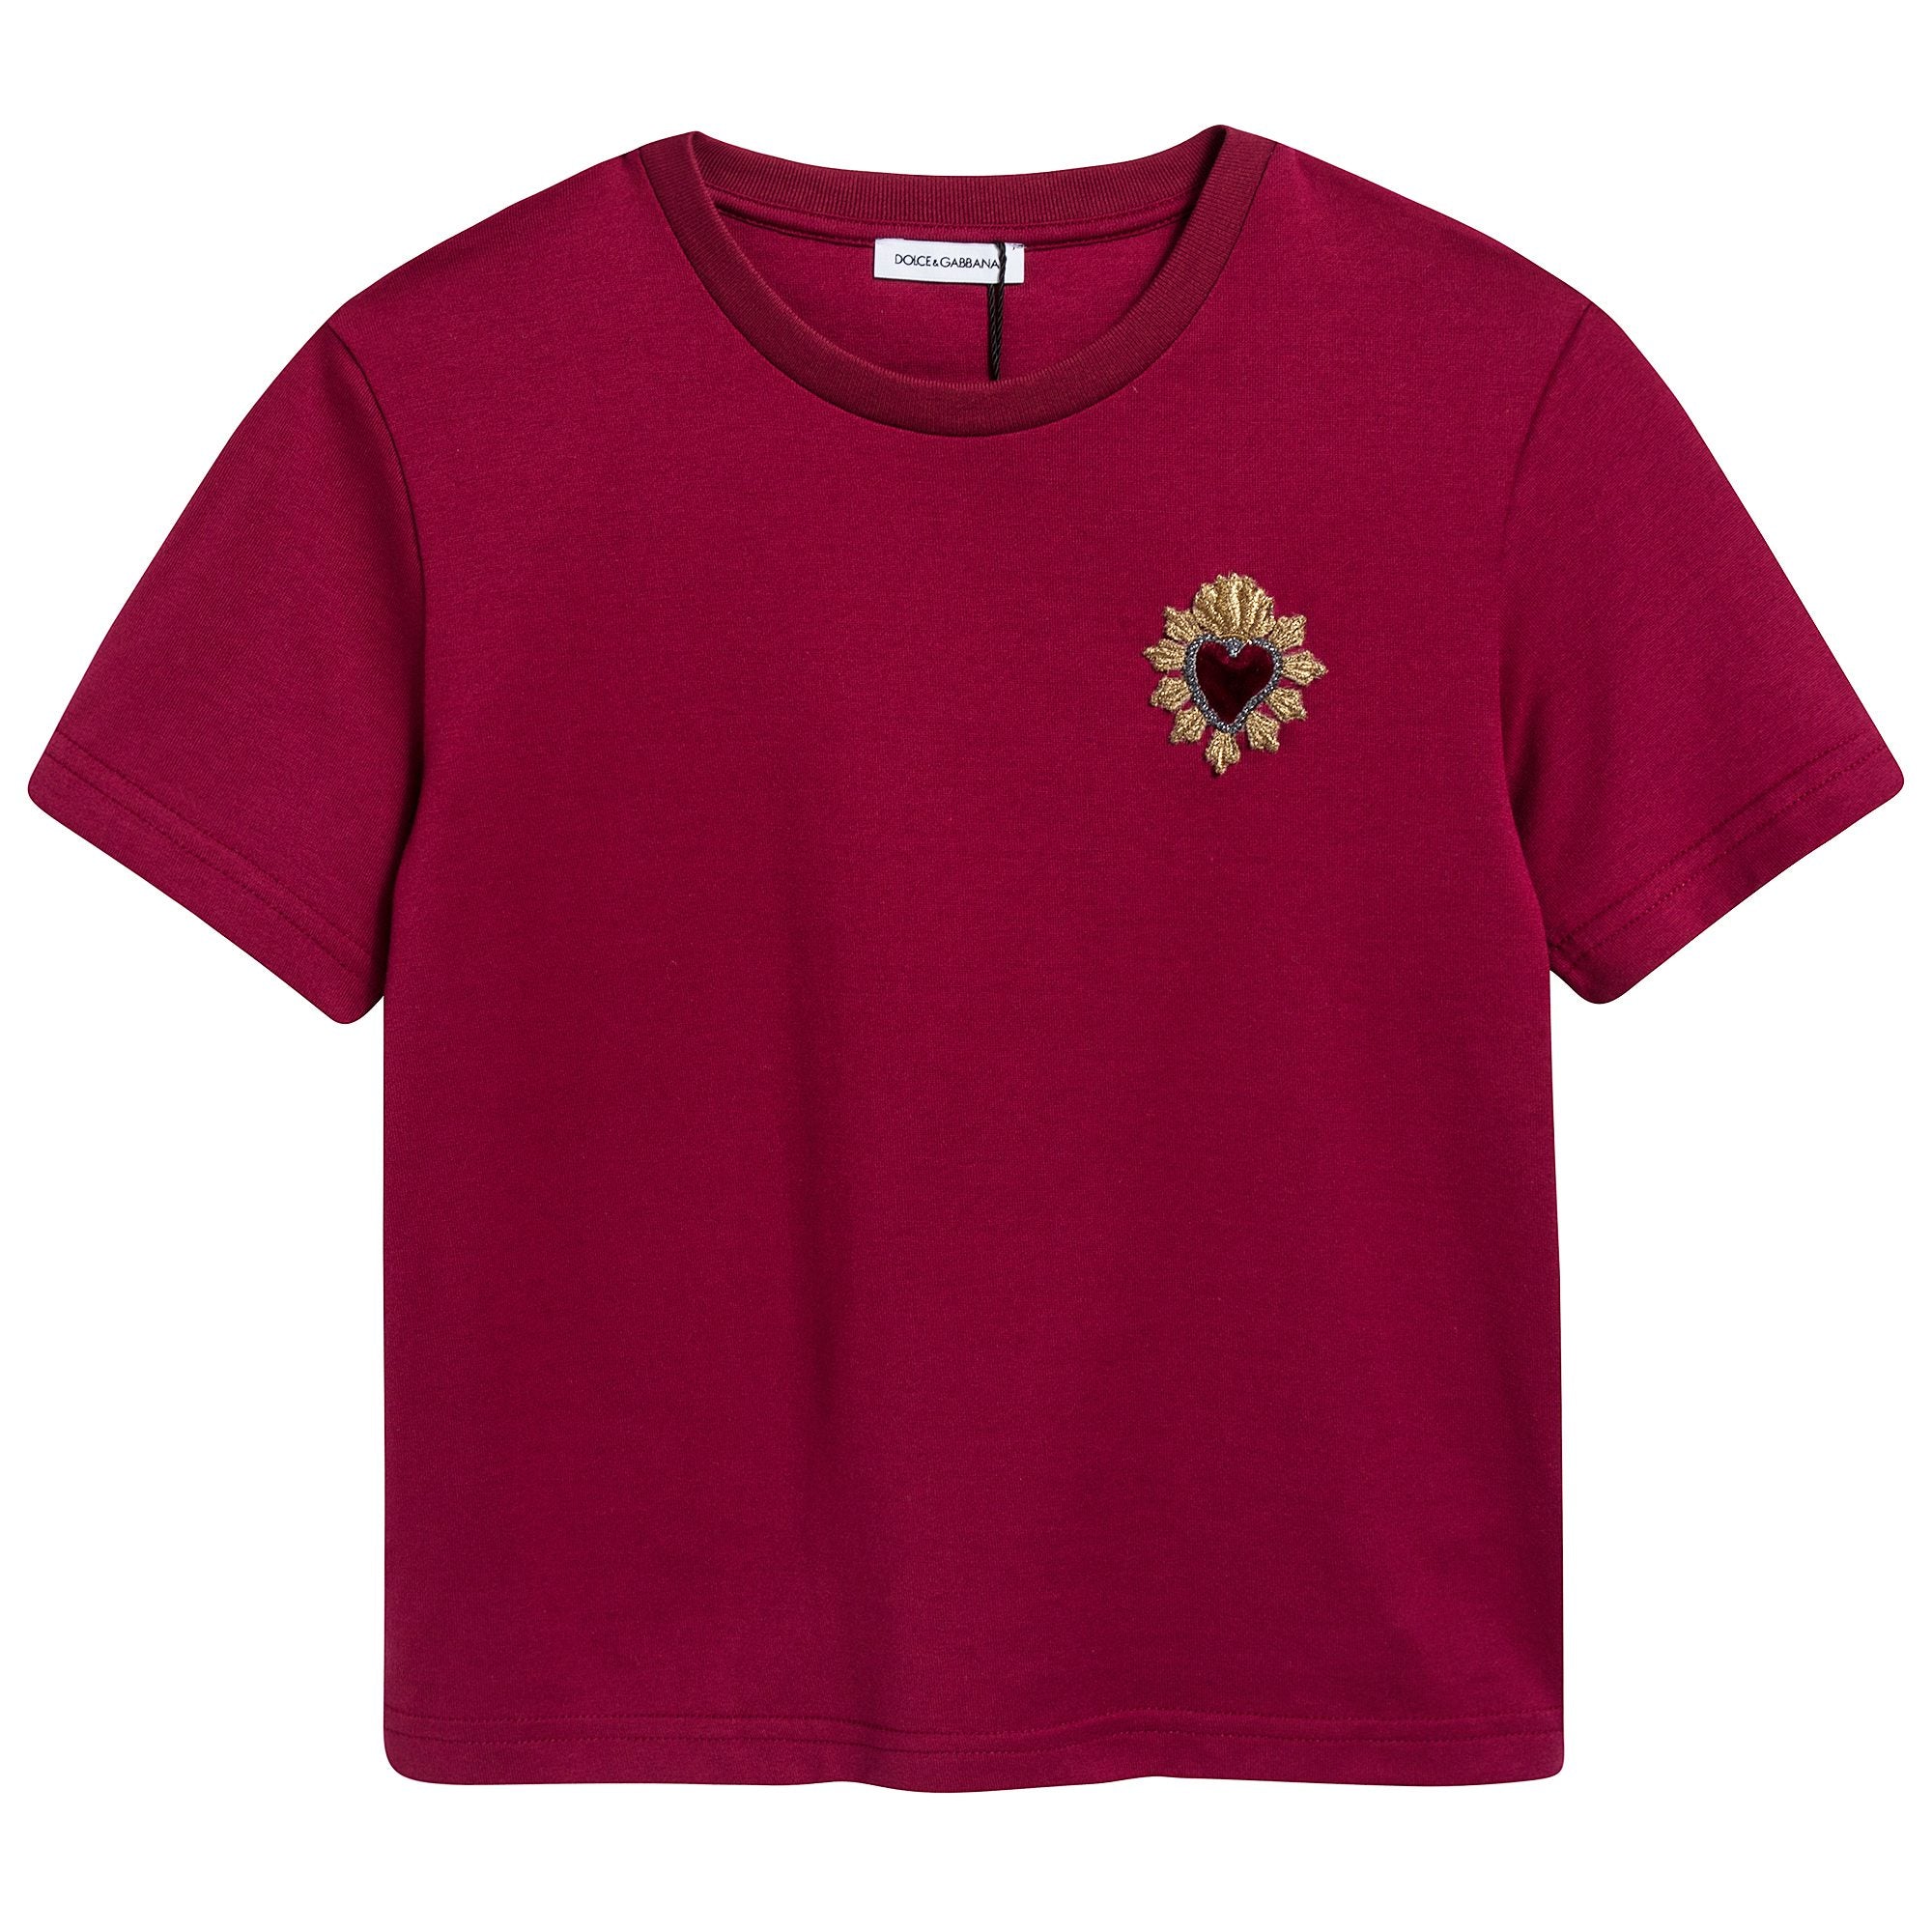 Girls Red Cotton T-shirt